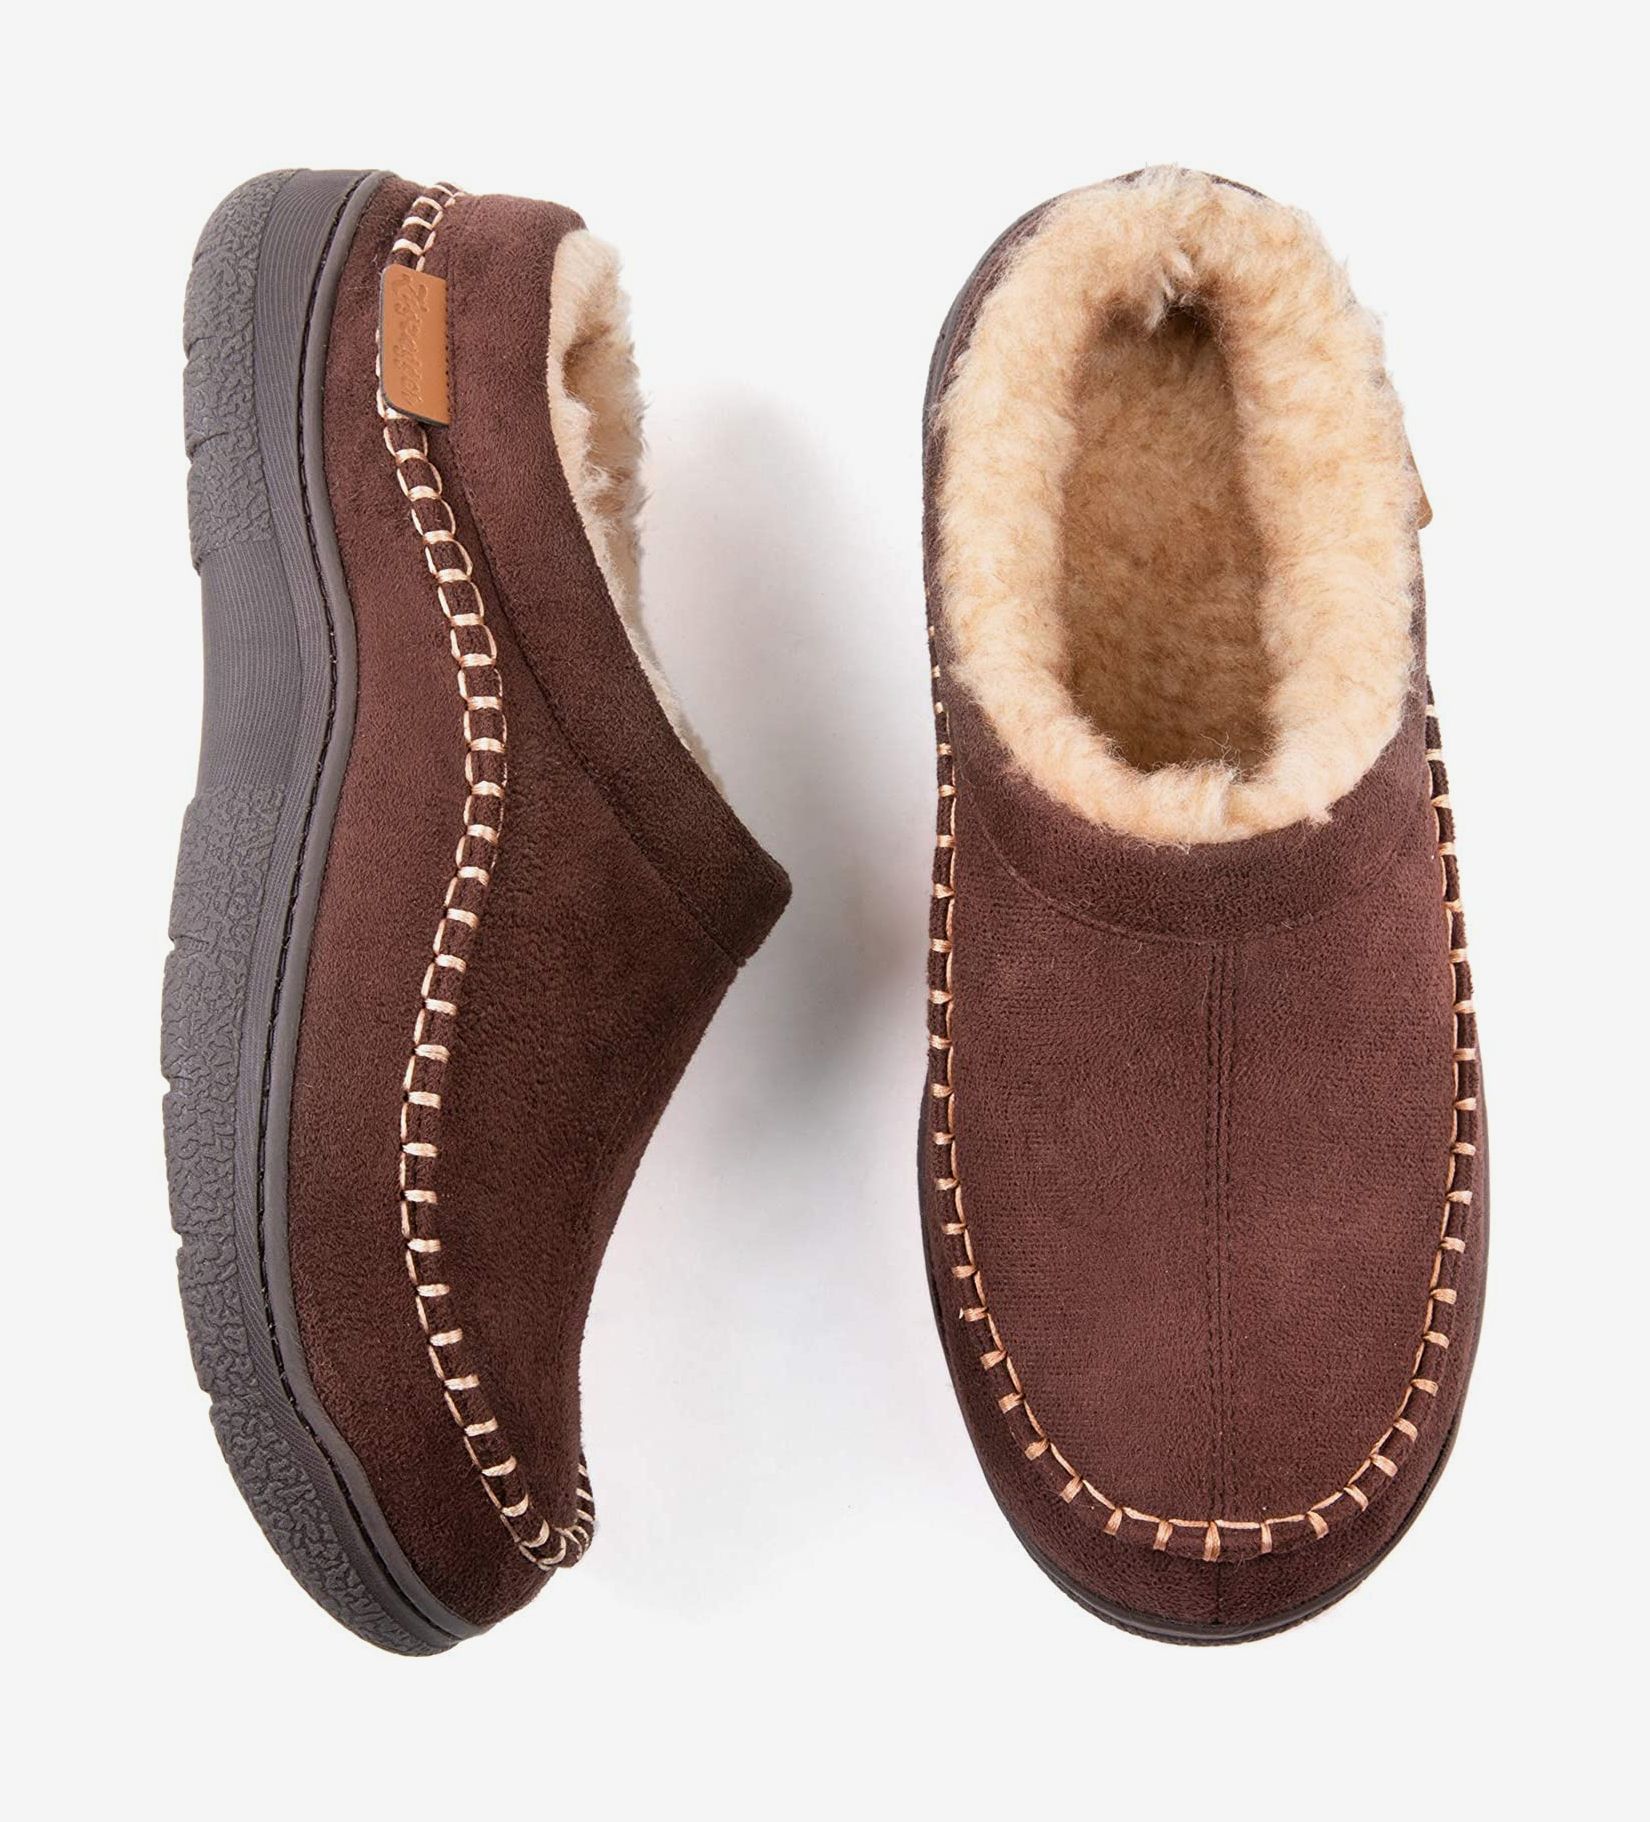 Men 100% leather slippers indoor outdoor comfy Size  UK 7,8,9,10,11